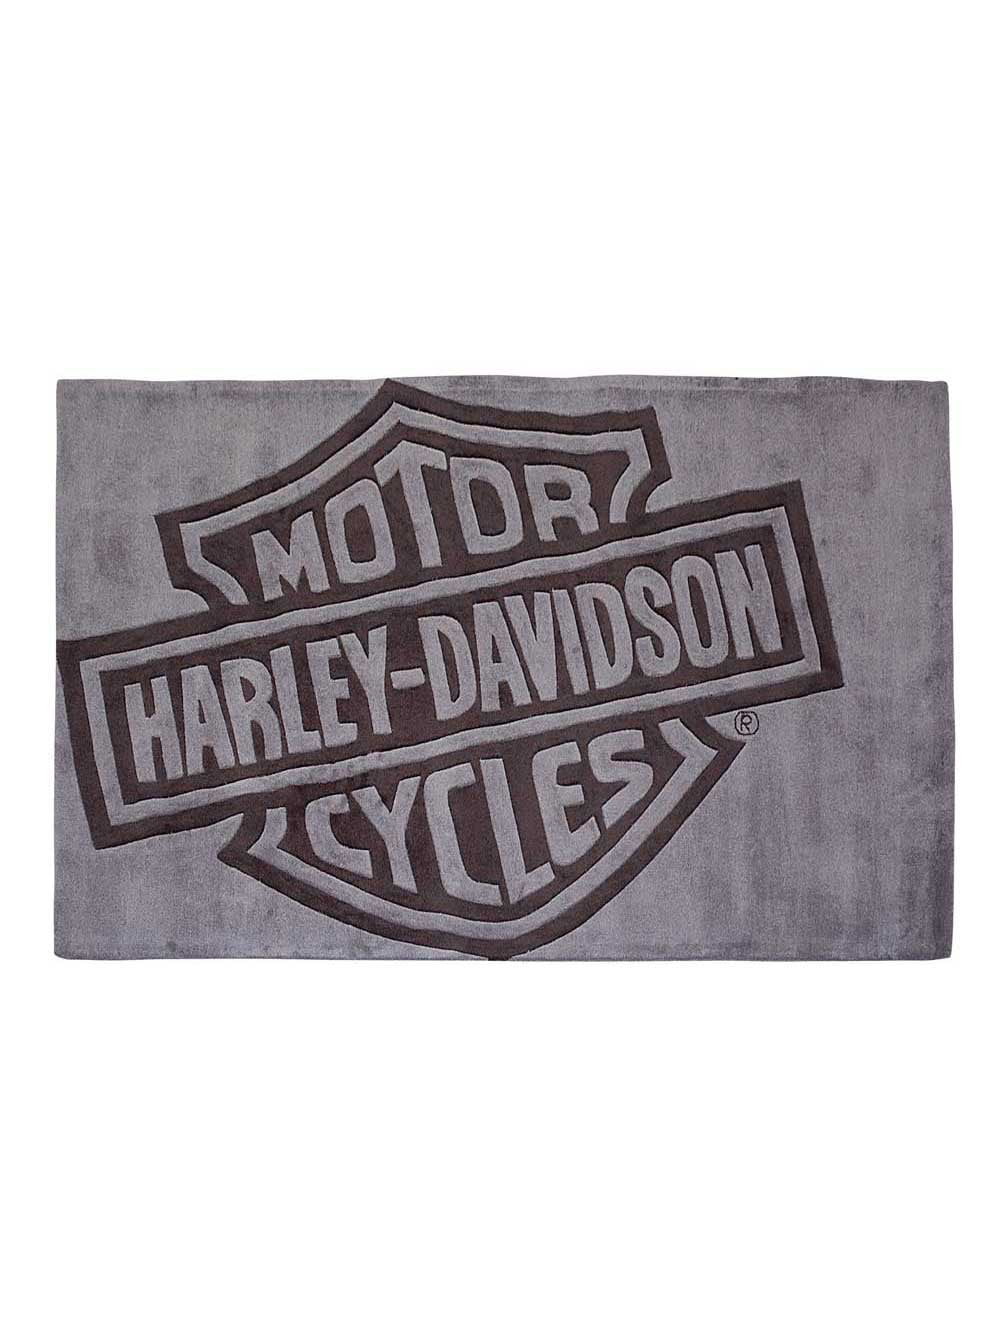 HARLEY DAVIDSON HAND CARVED RUG  HOT PINK 100% Acrylic Bar & Shield Logo 